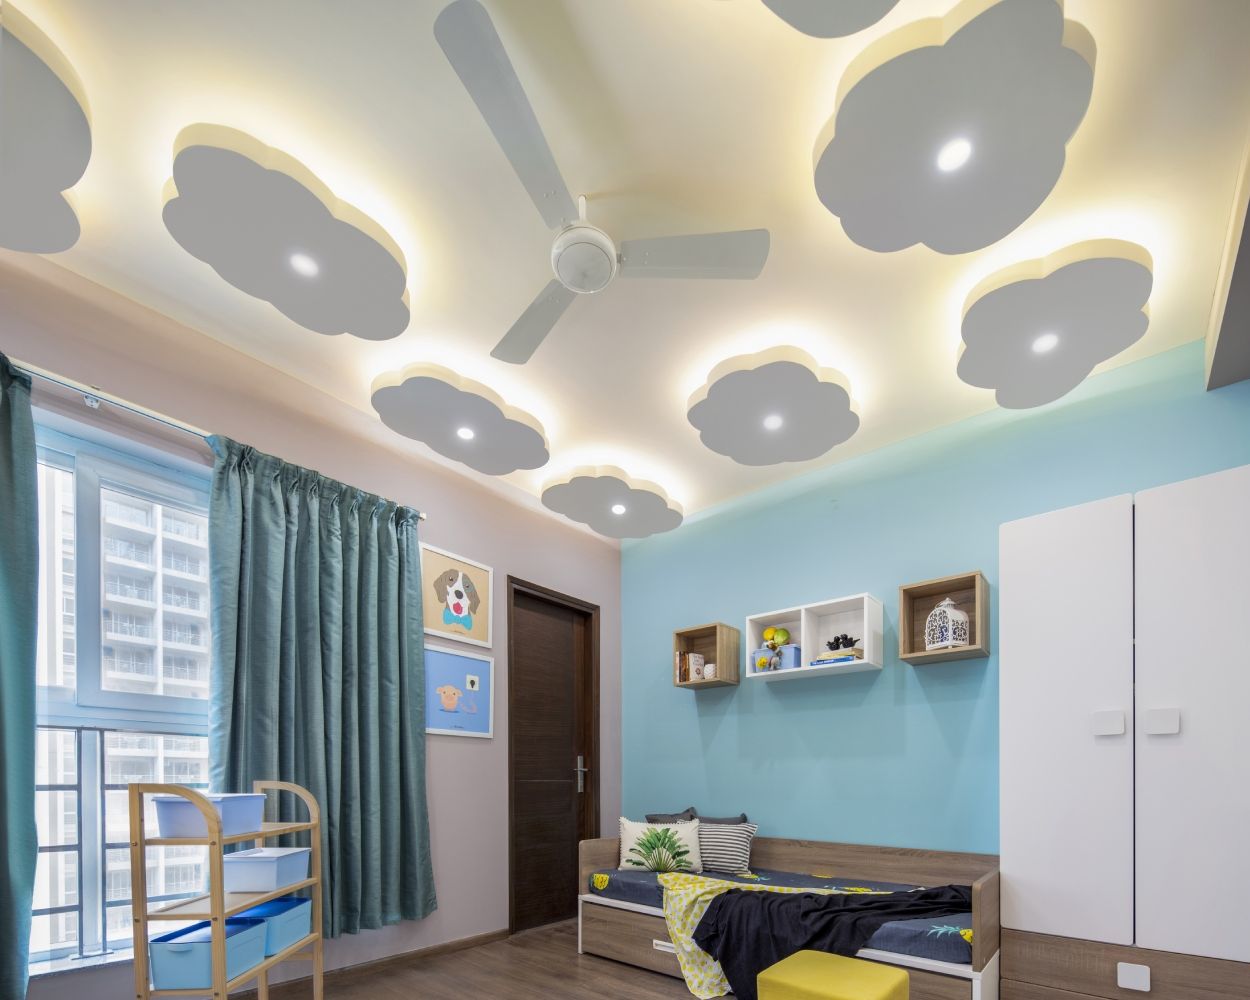 Multilayered Modern False Ceiling Design With Cloud-Shaped Lighting